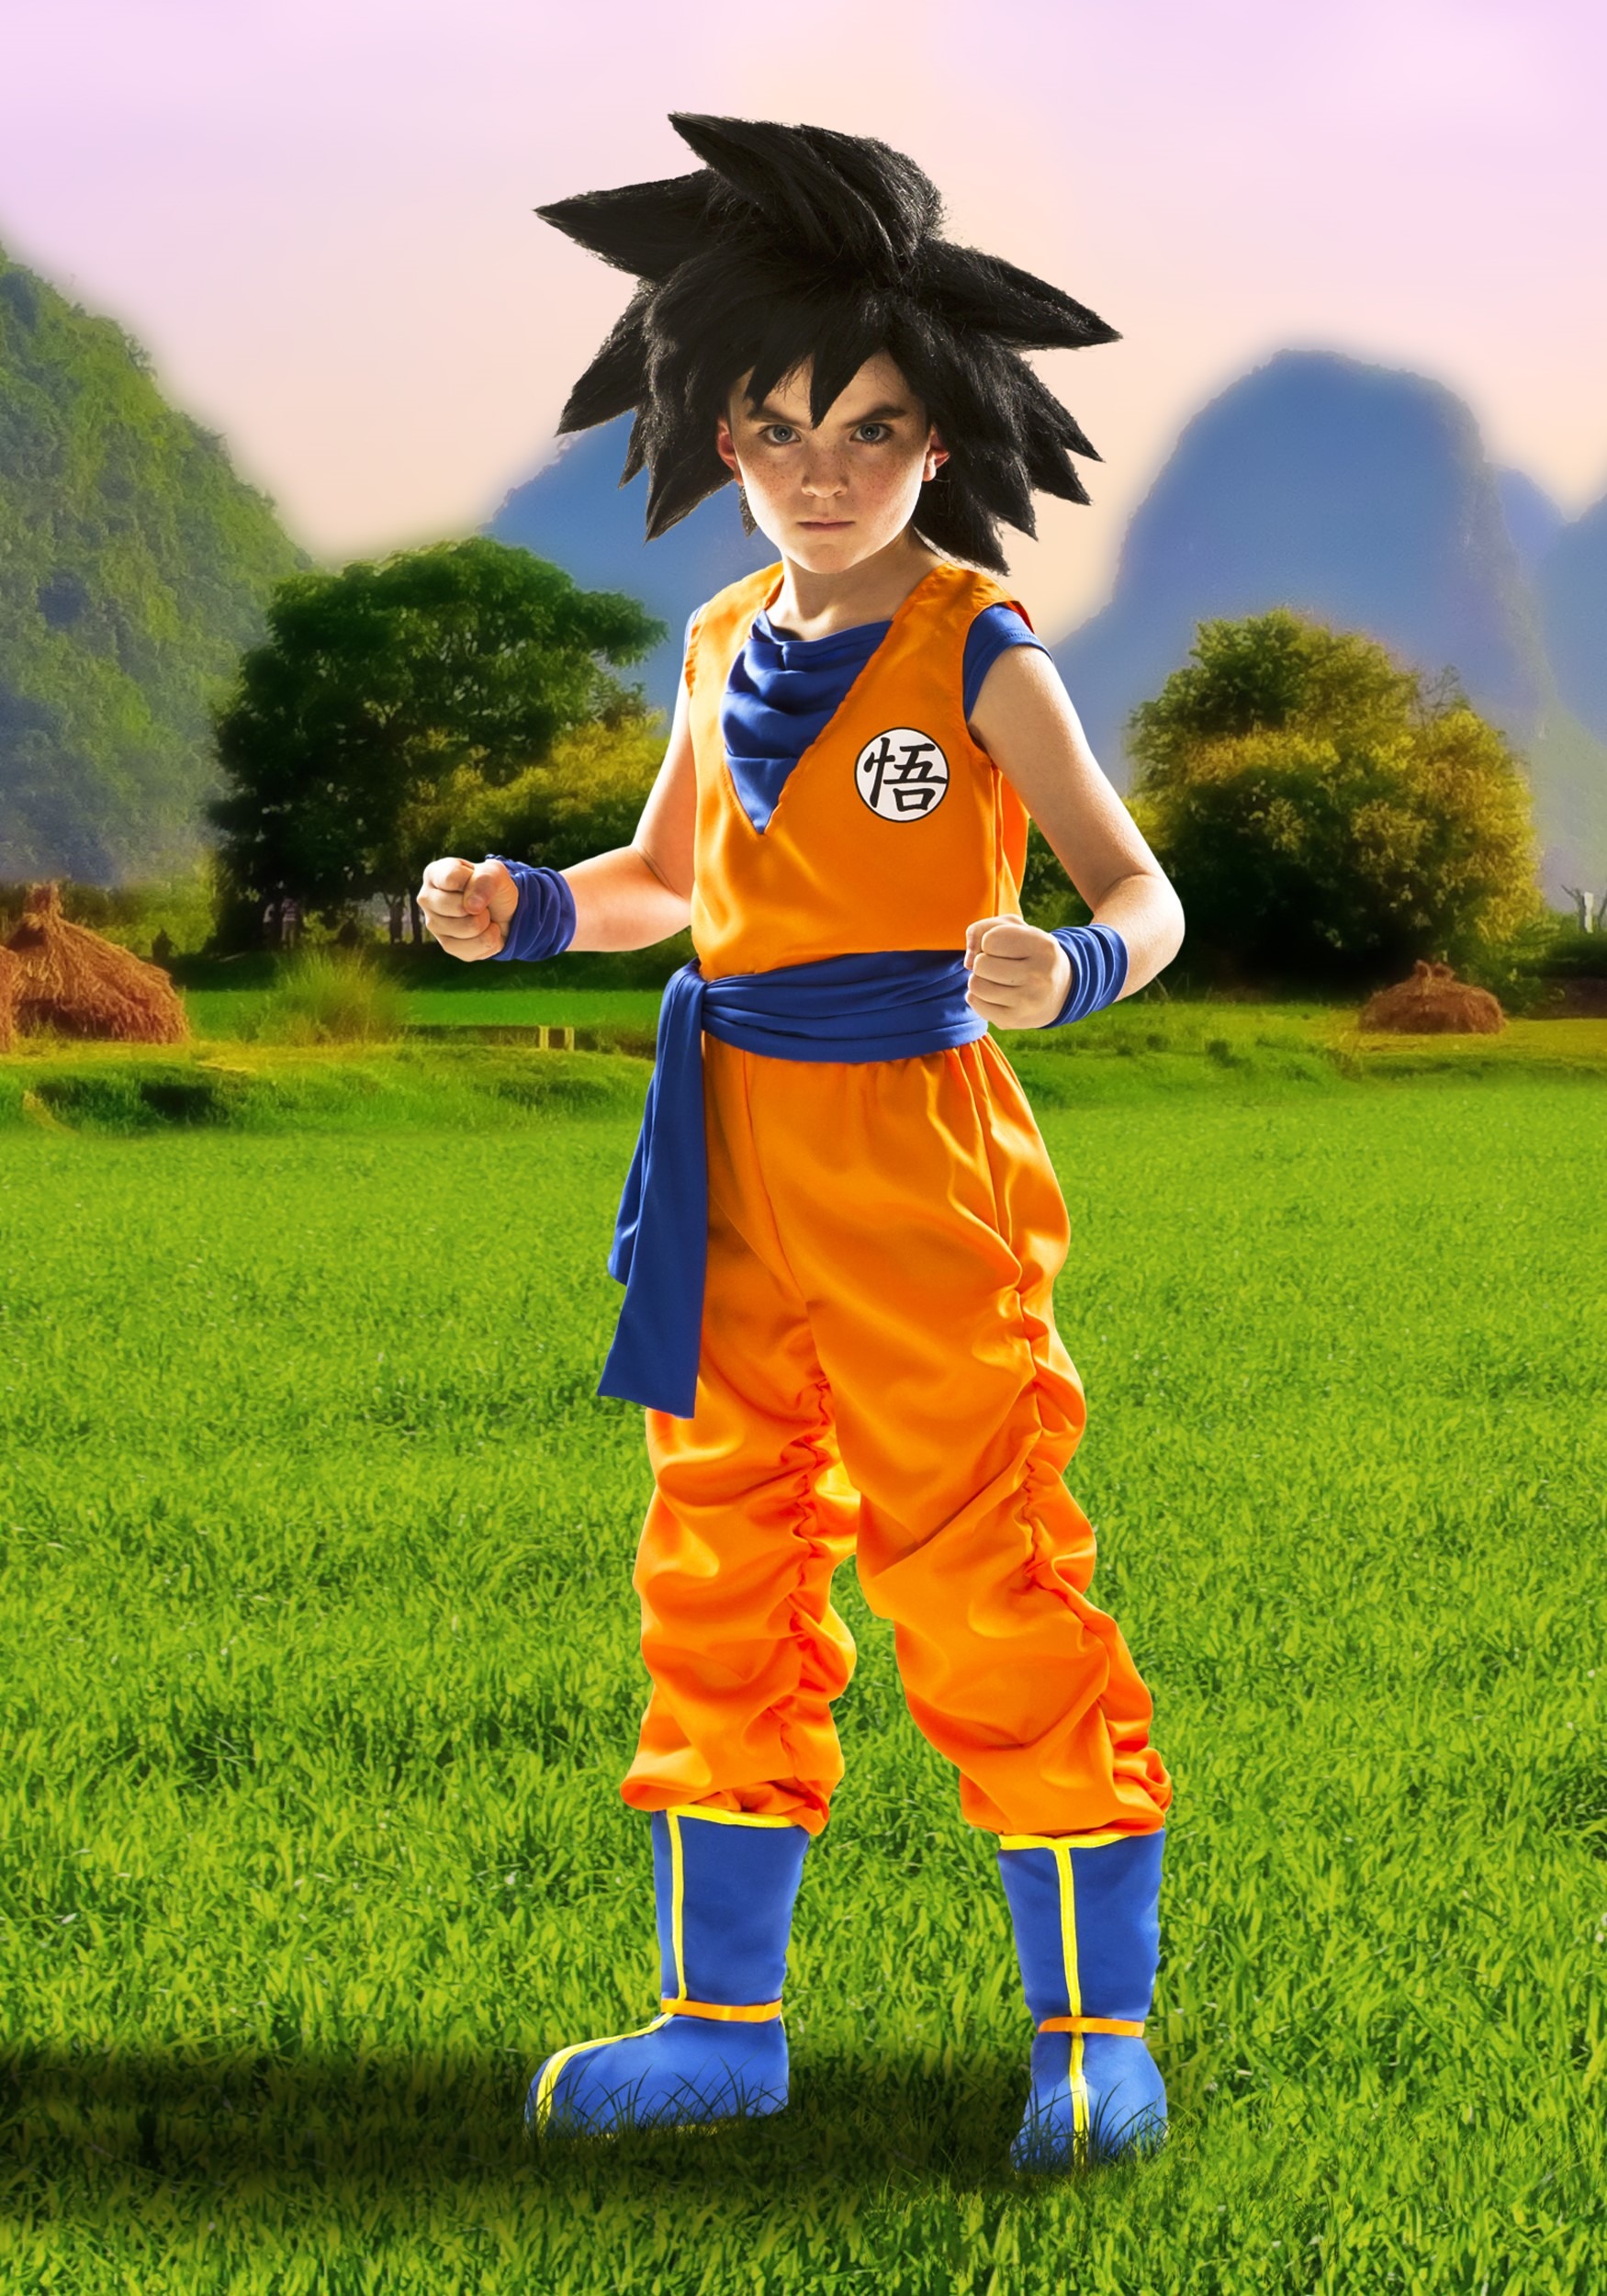 Vegeta IV Son Goku Babysuit Romper Onepiece Hallowwen Outfit Cosplay Costume 